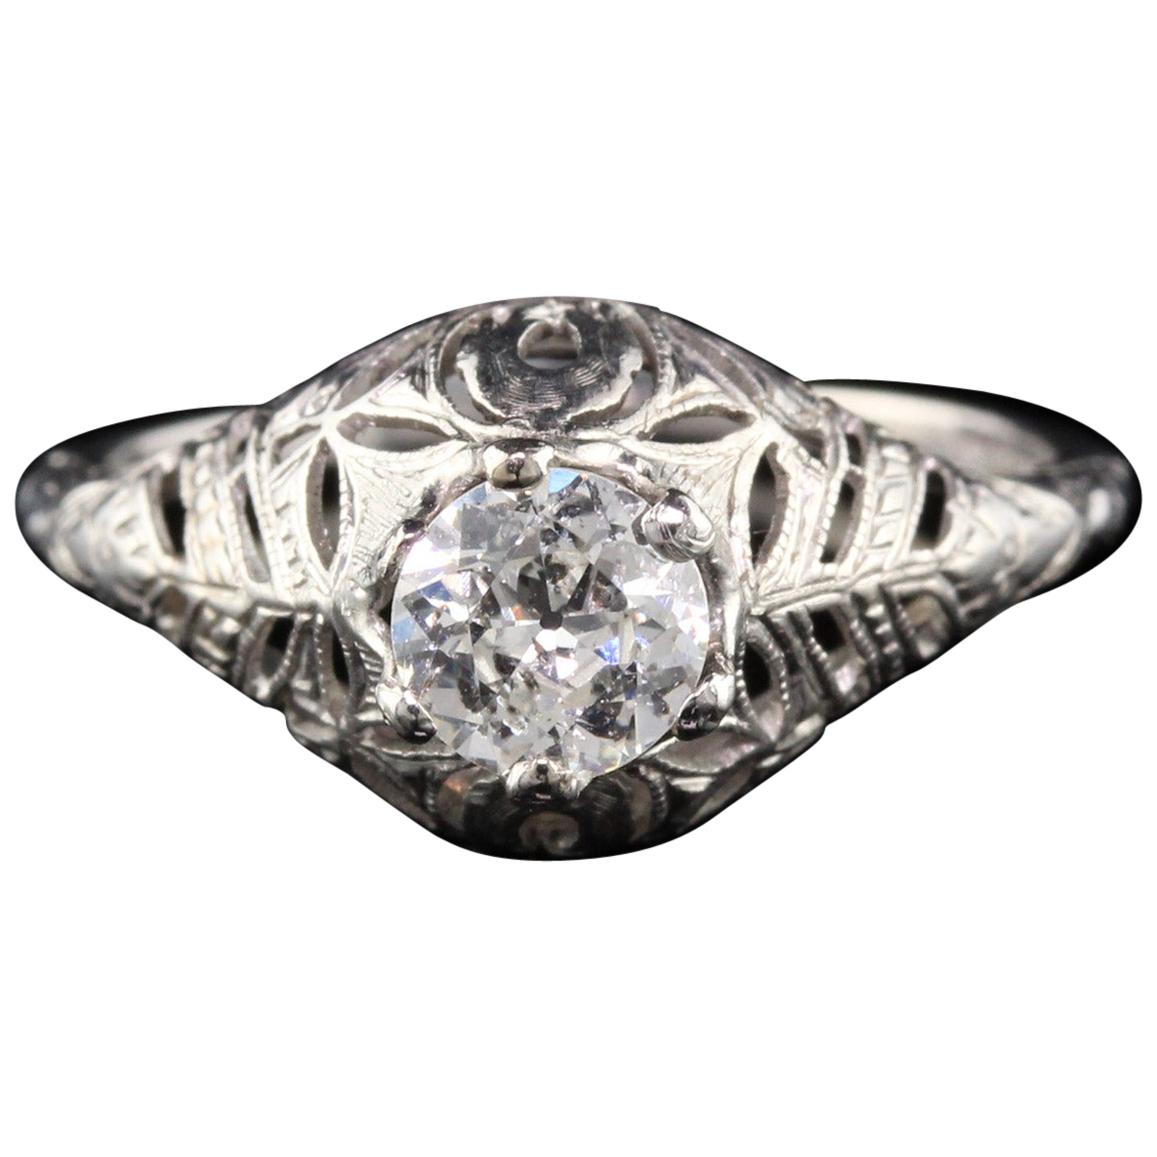 Antique Art Deco Platinum Diamond Engagement Ring For Sale